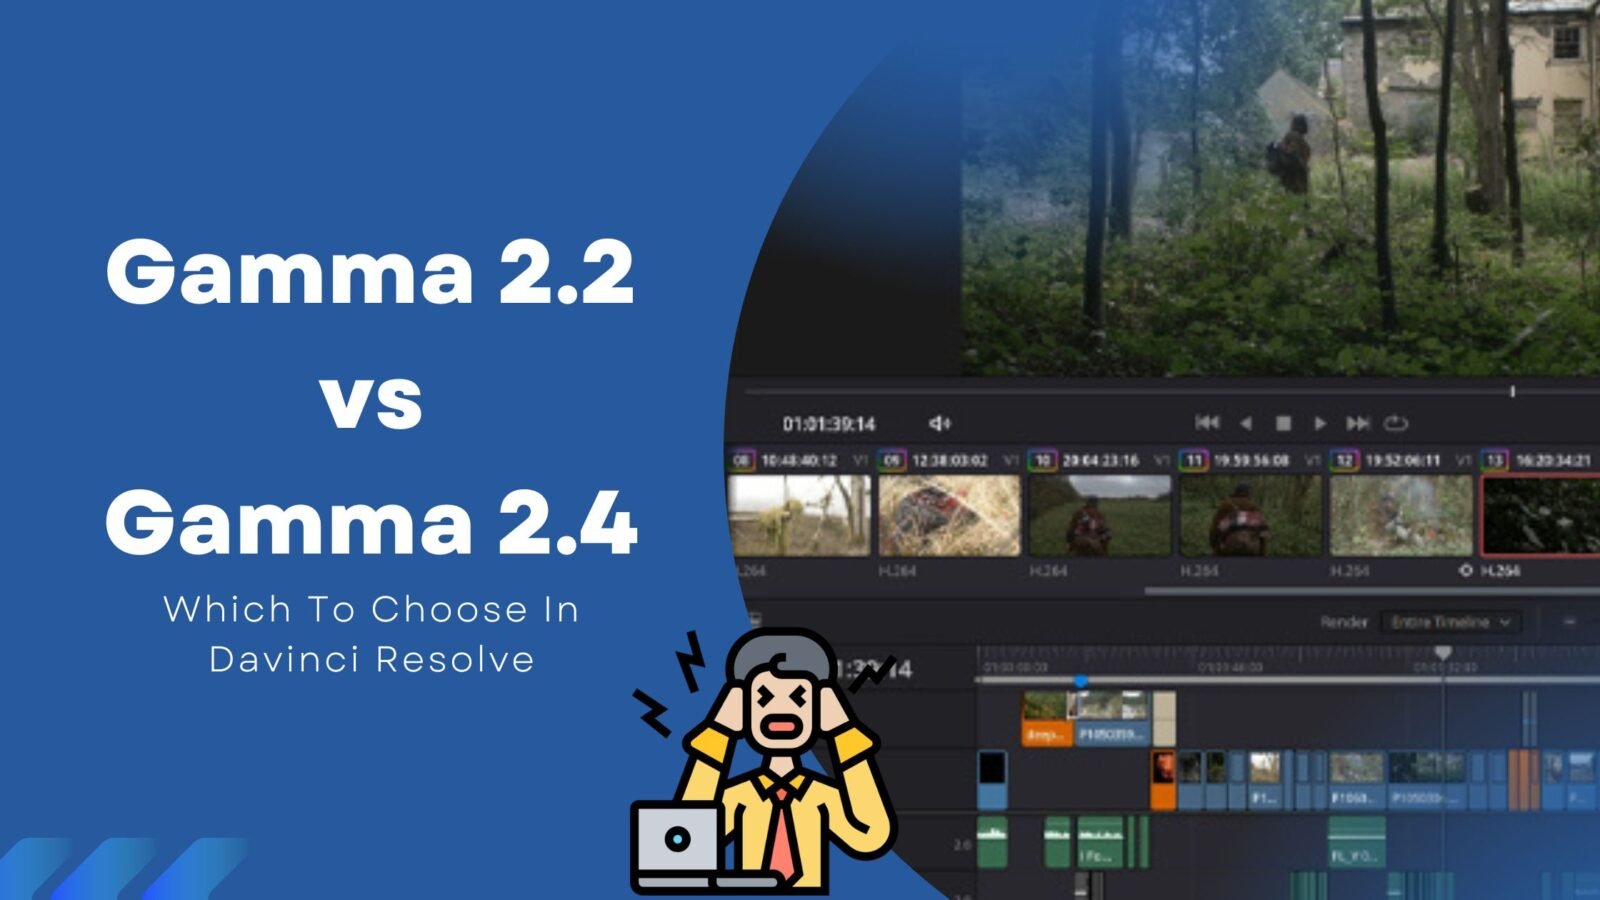 Gamma 2.2 vs Gamma 2.4 Which To Choose In Davinci Resolve